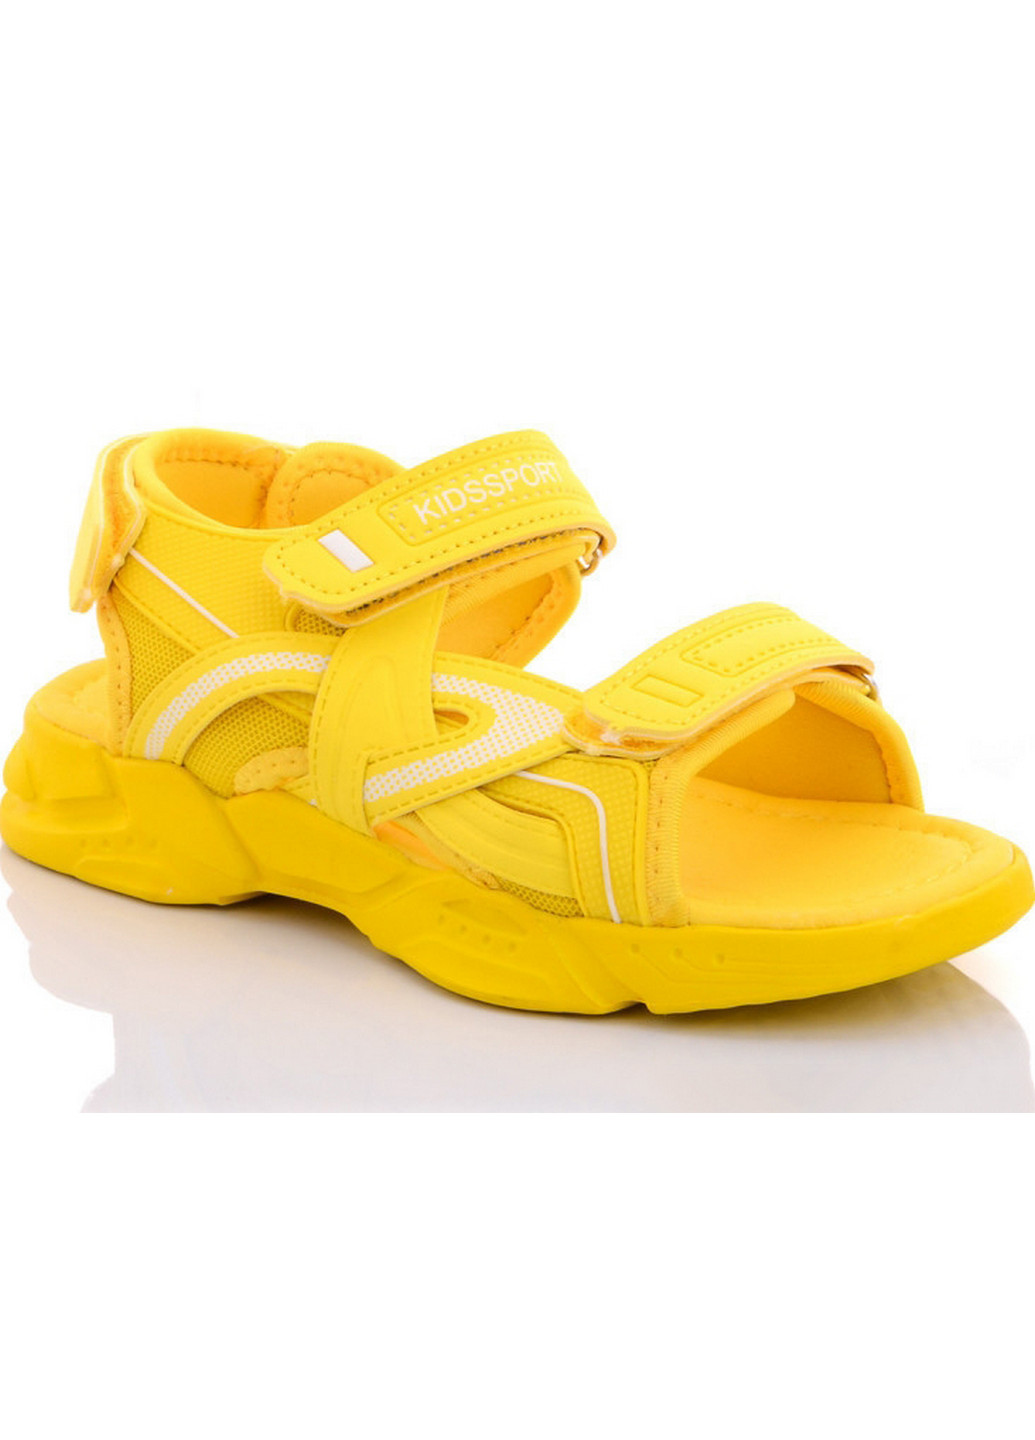 Спортивные сандалии DR951-3H 37 Желтый Kimbo (224566620)